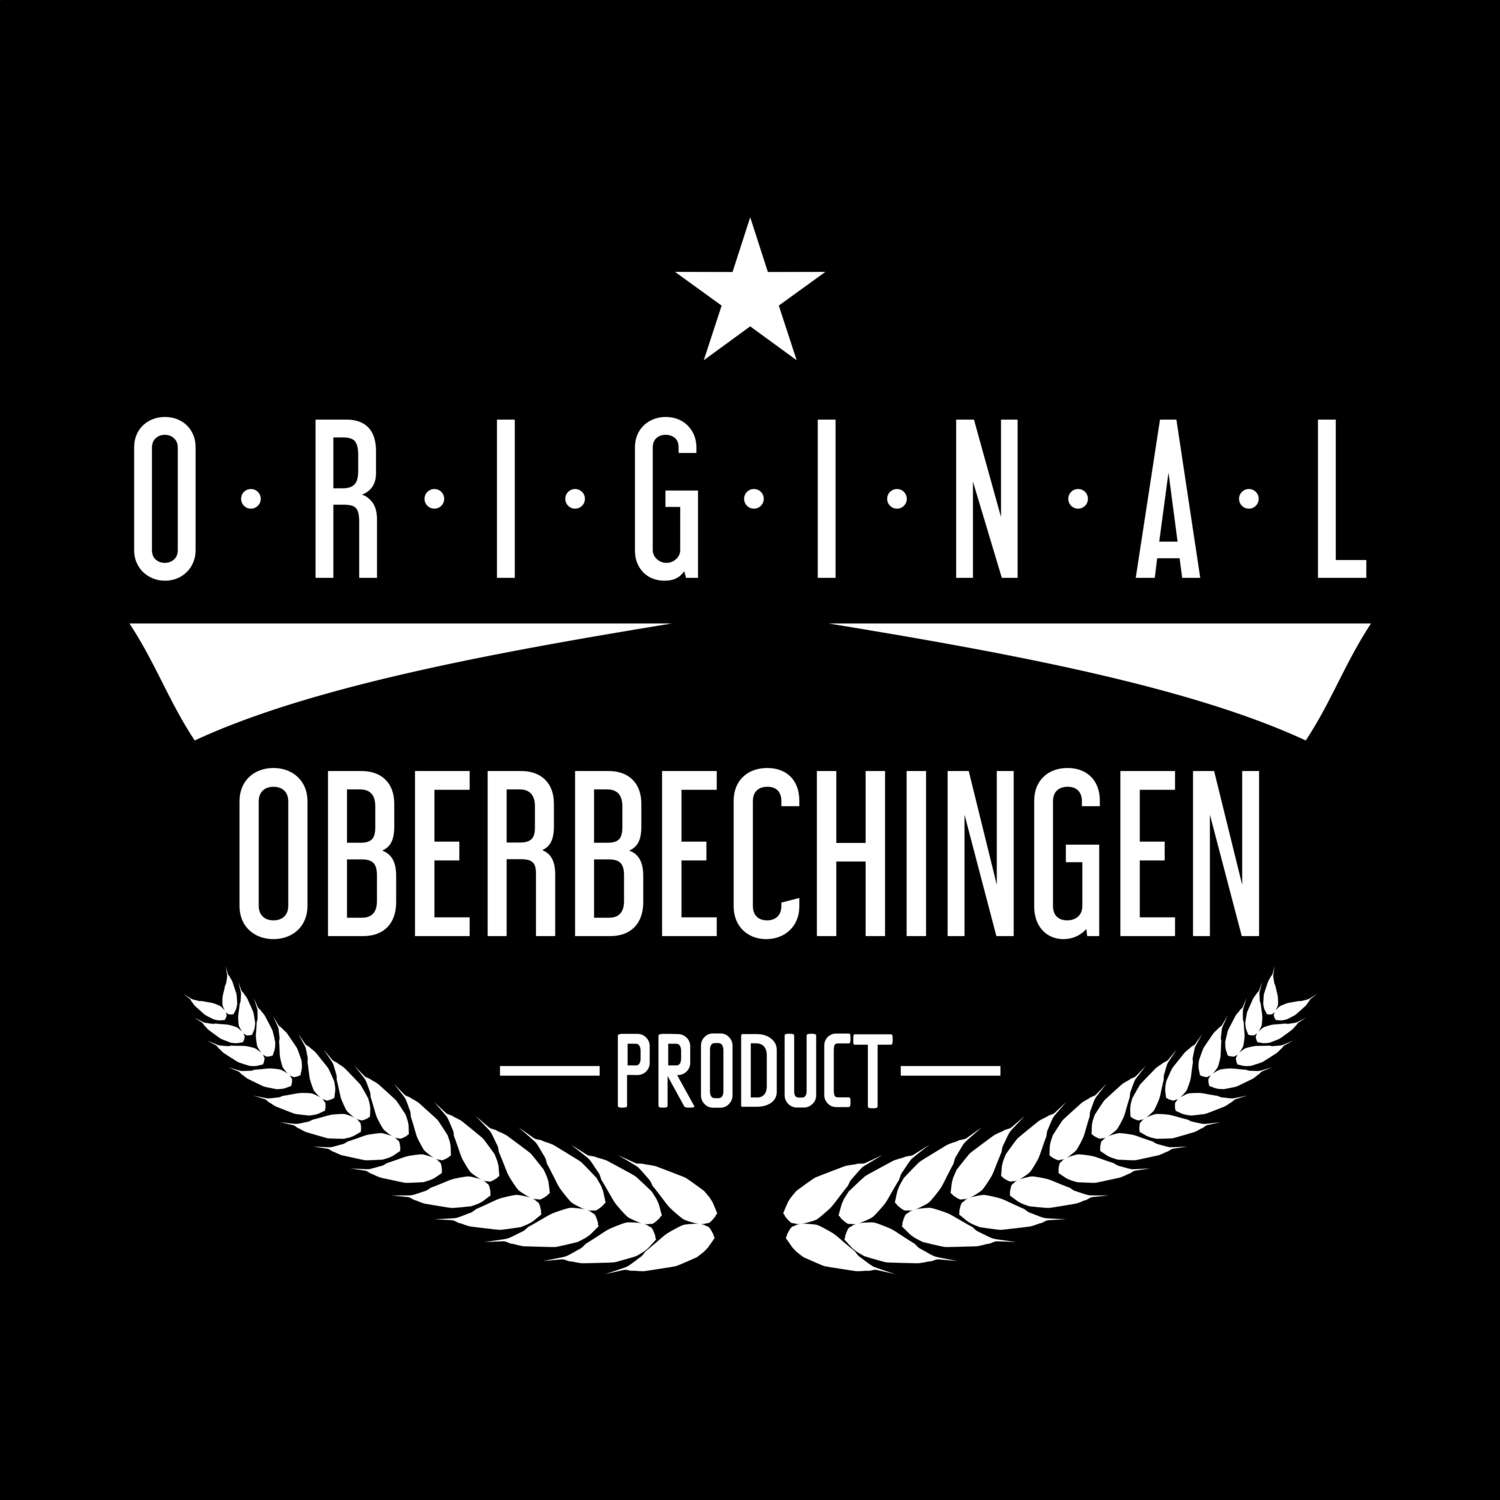 Oberbechingen T-Shirt »Original Product«